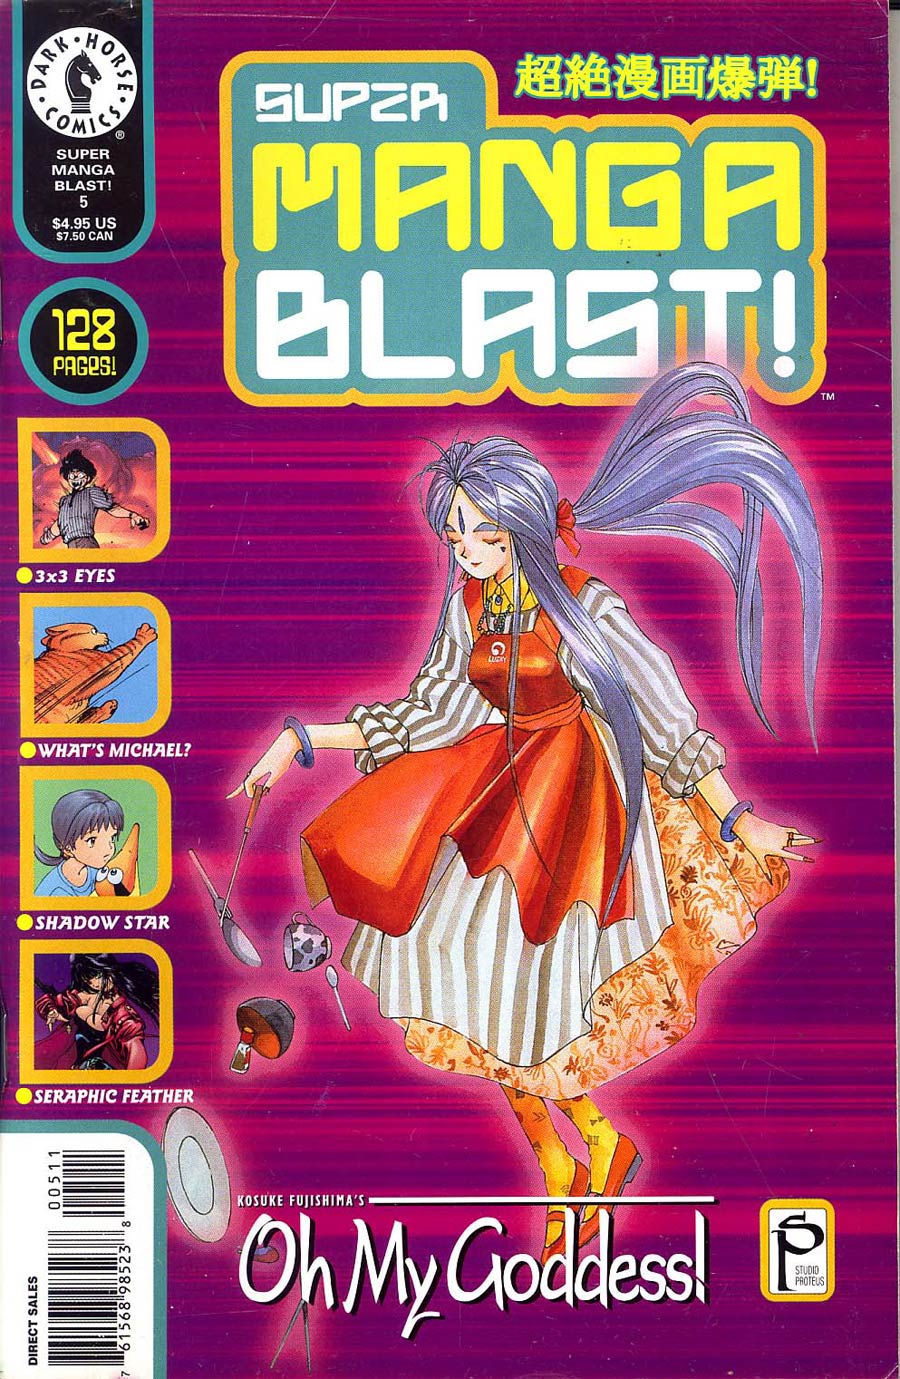 Super Manga Blast #5